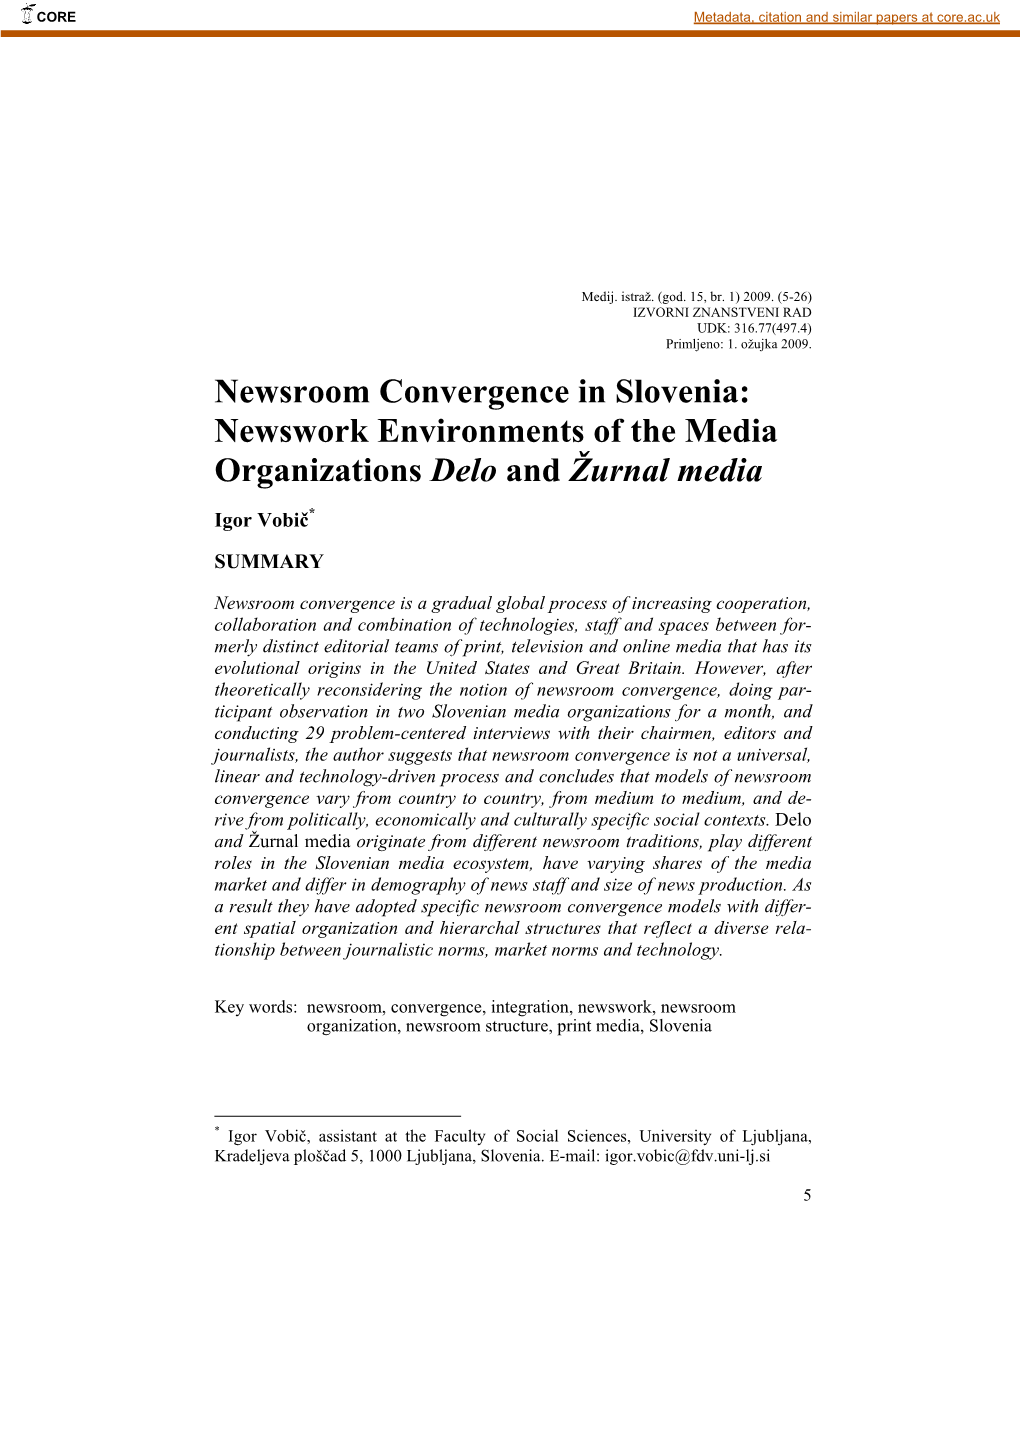 Newsroom Convergence in Slovenia: Newswork Environments of the Media Organizations Delo and Žurnal Media